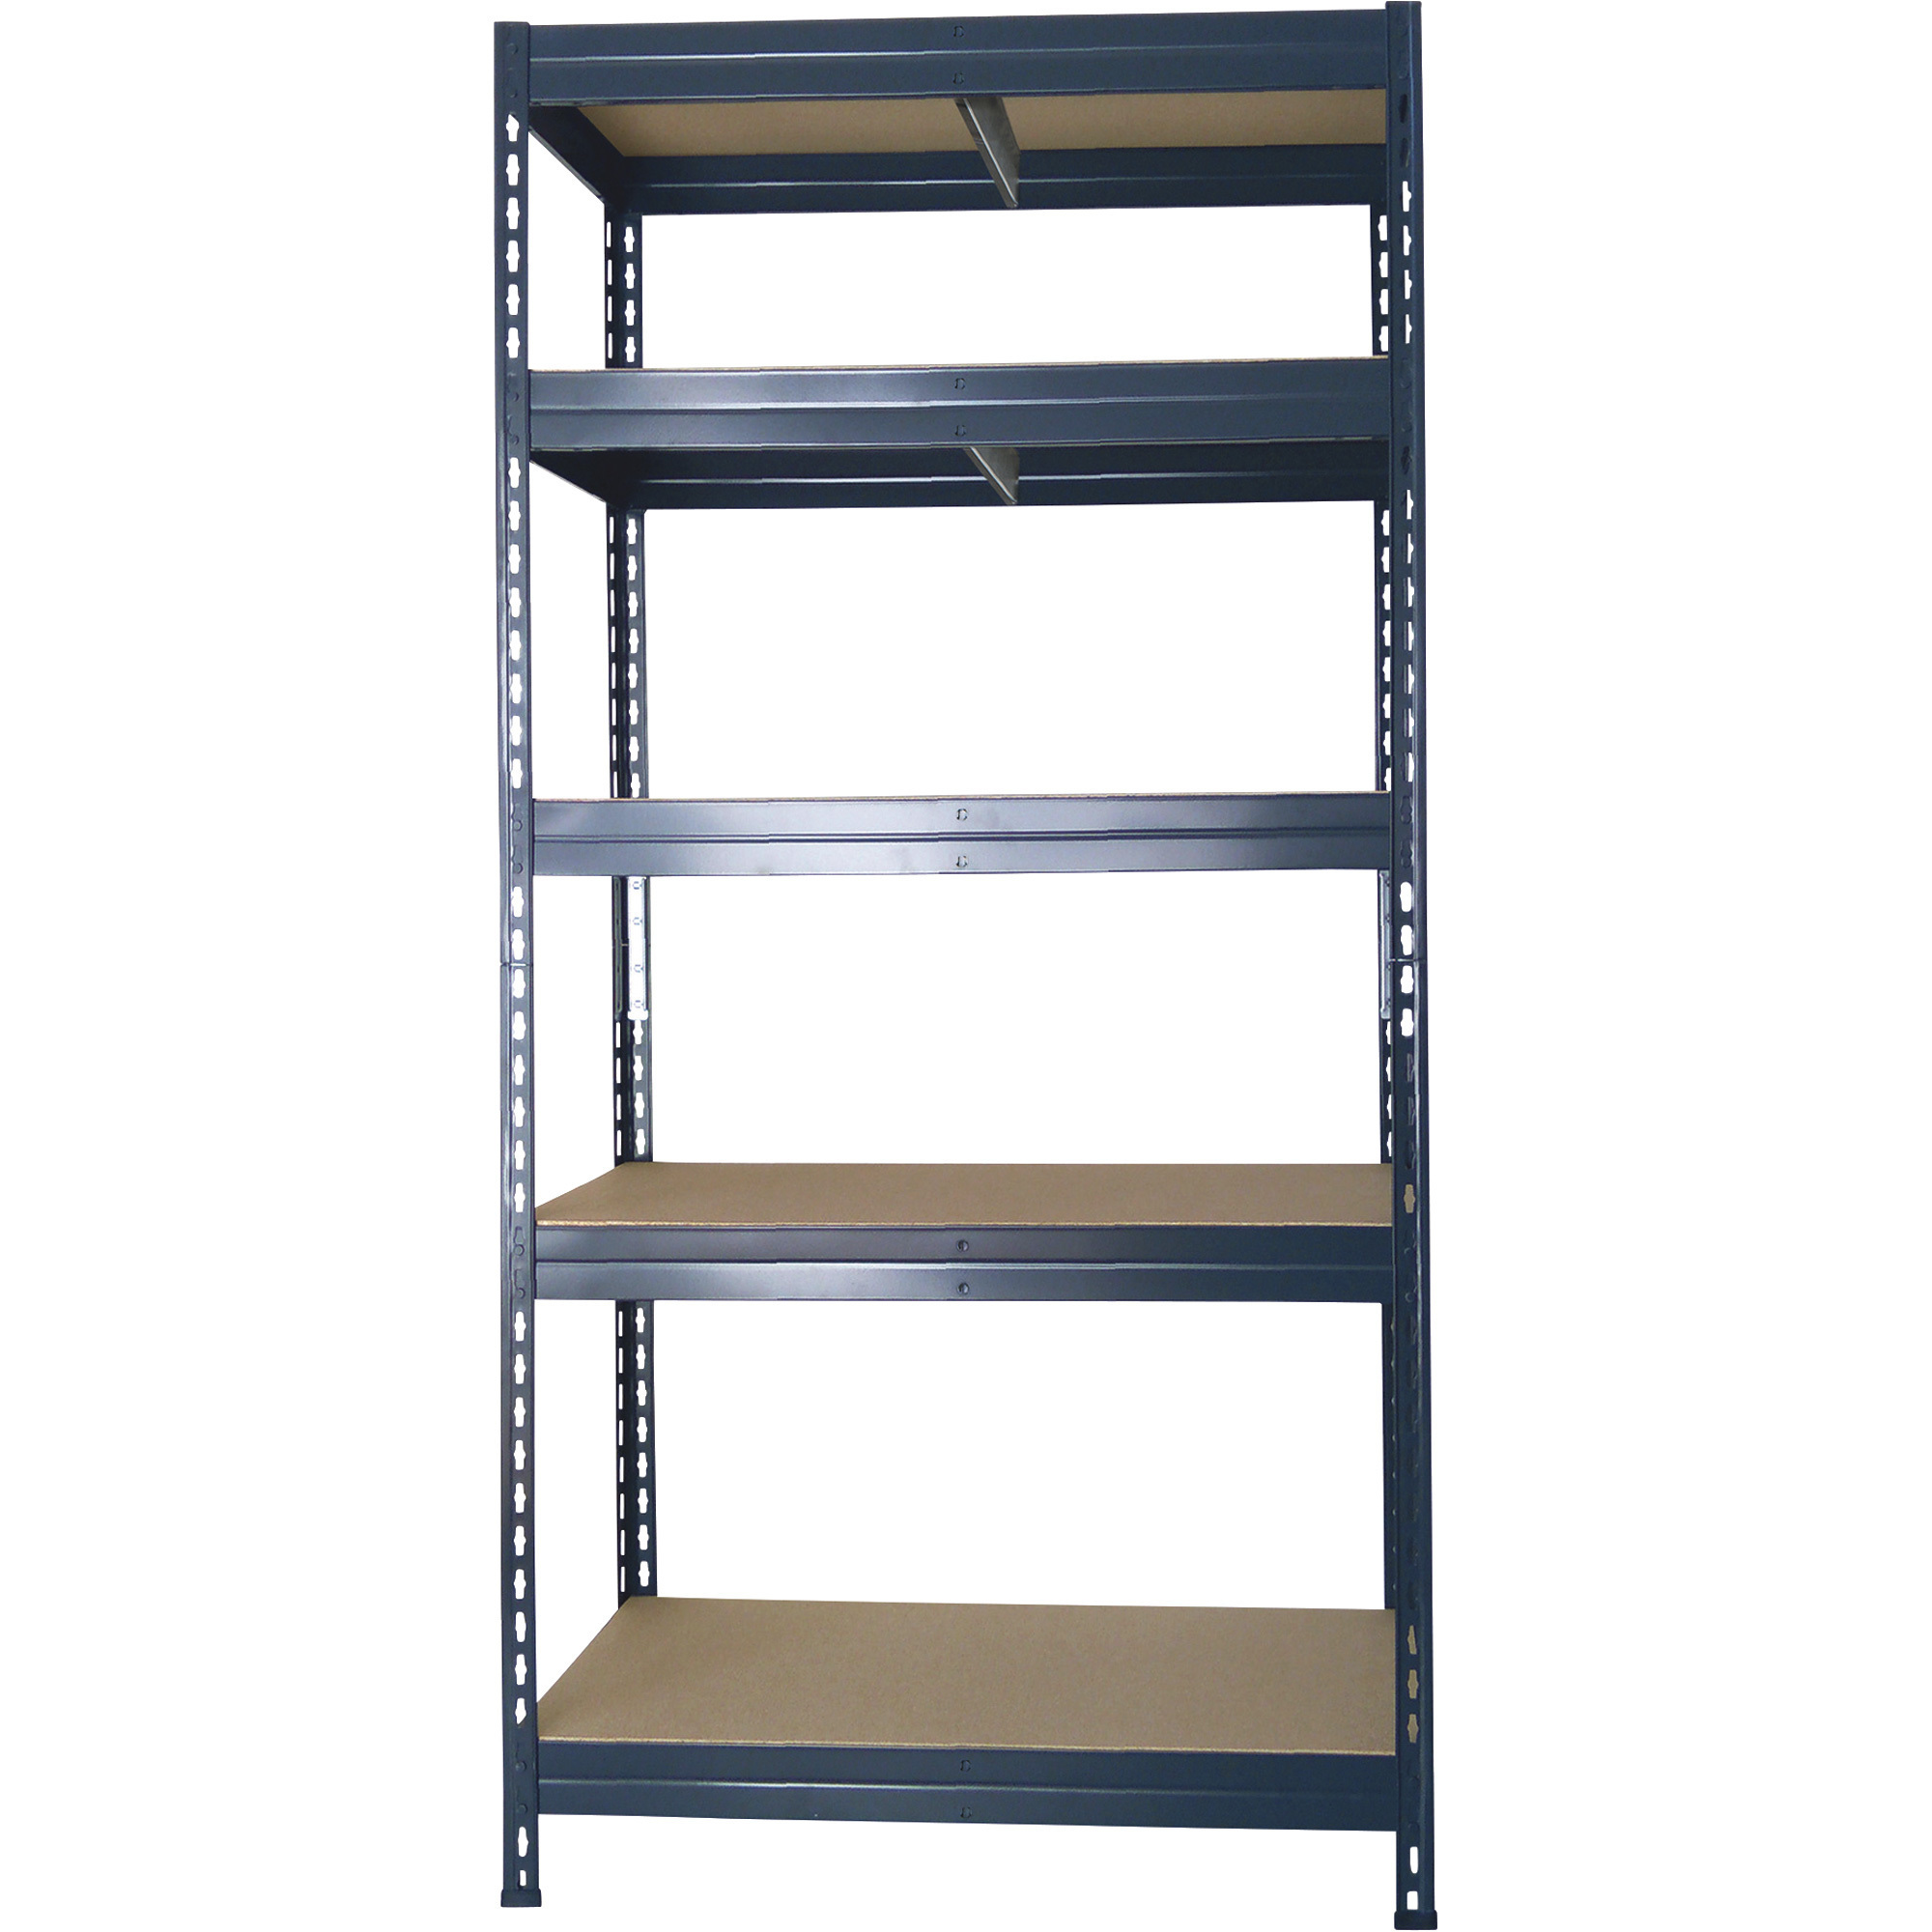 AR Shelving Fiberboard Deck Shelving â 36Inch W x 18Inch D x 71Inch H, 4 Shelves, 1000-Lb. Capacity per Shelf, Model RIVET 90/45